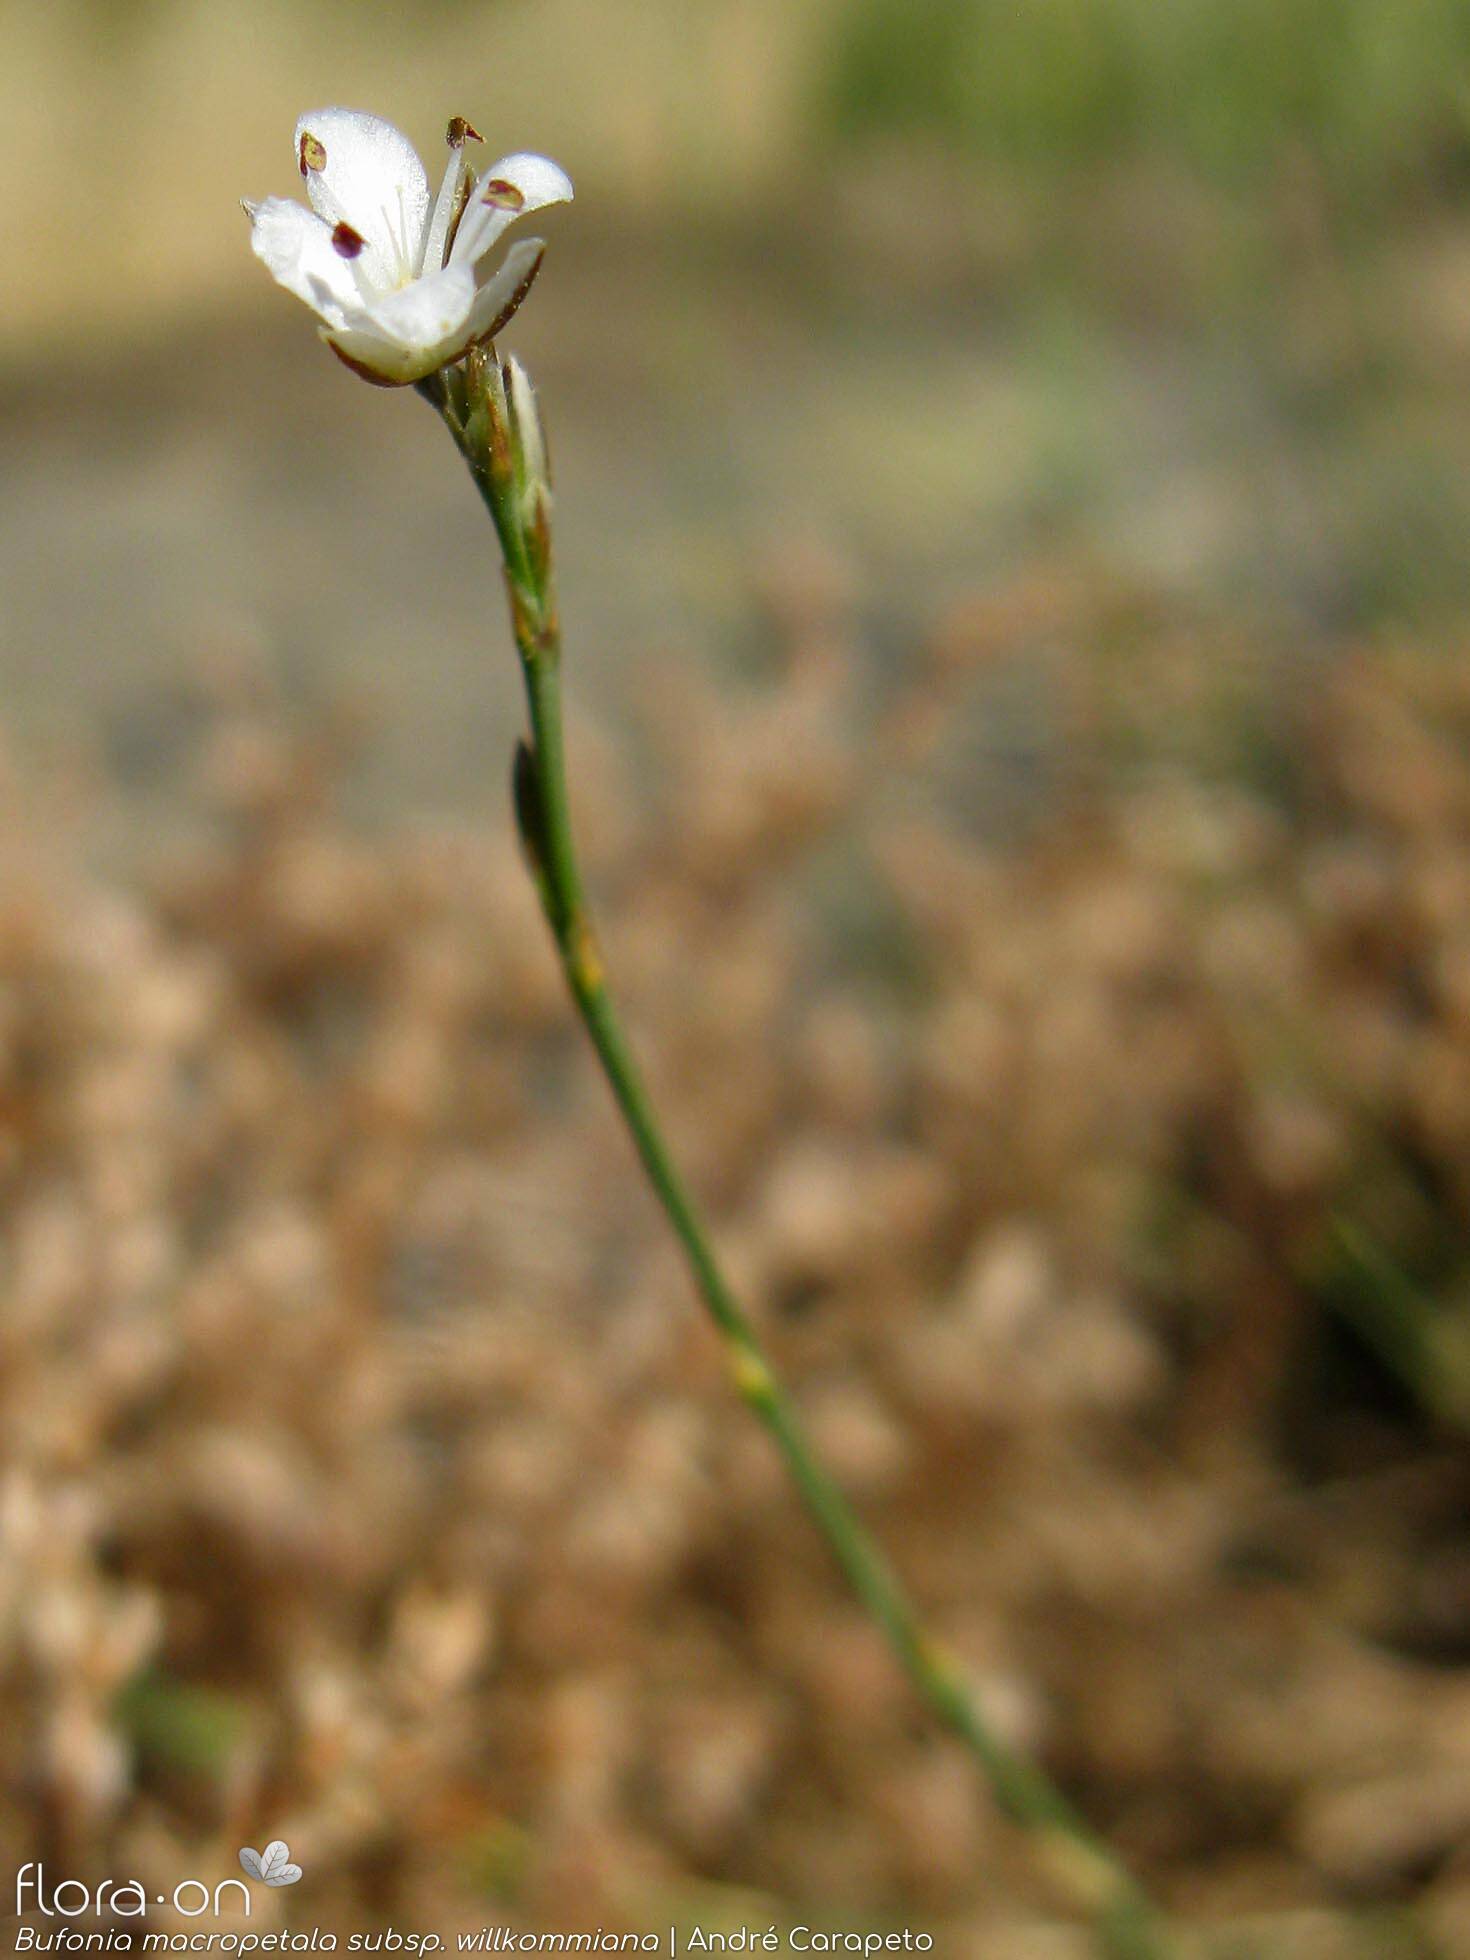 Bufonia macropetala willkommiana - Flor (geral) | André Carapeto; CC BY-NC 4.0